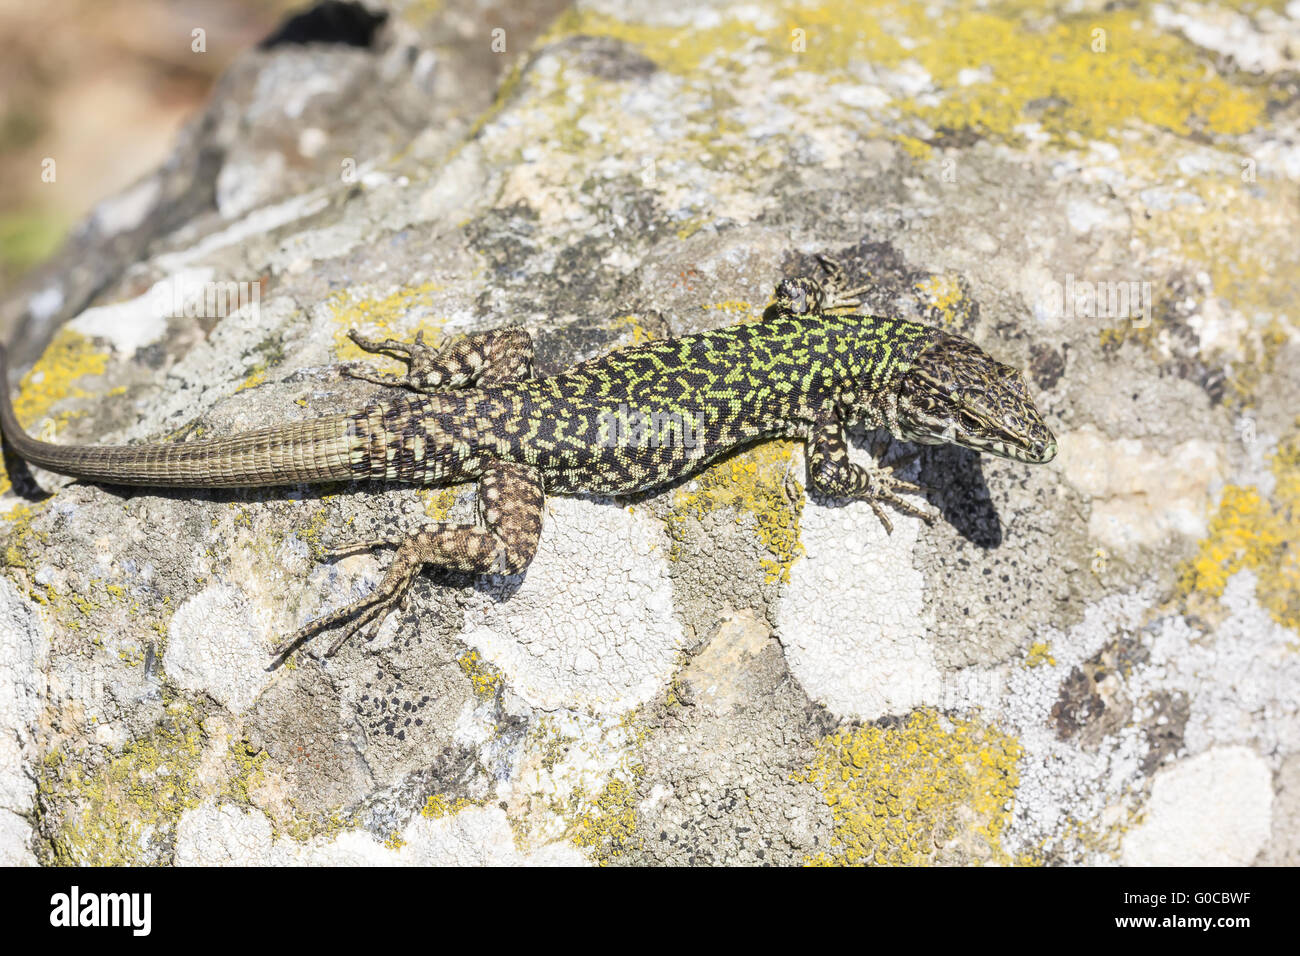 Podarcis sicula campestris, Italian Wall Lizard Stock Photo